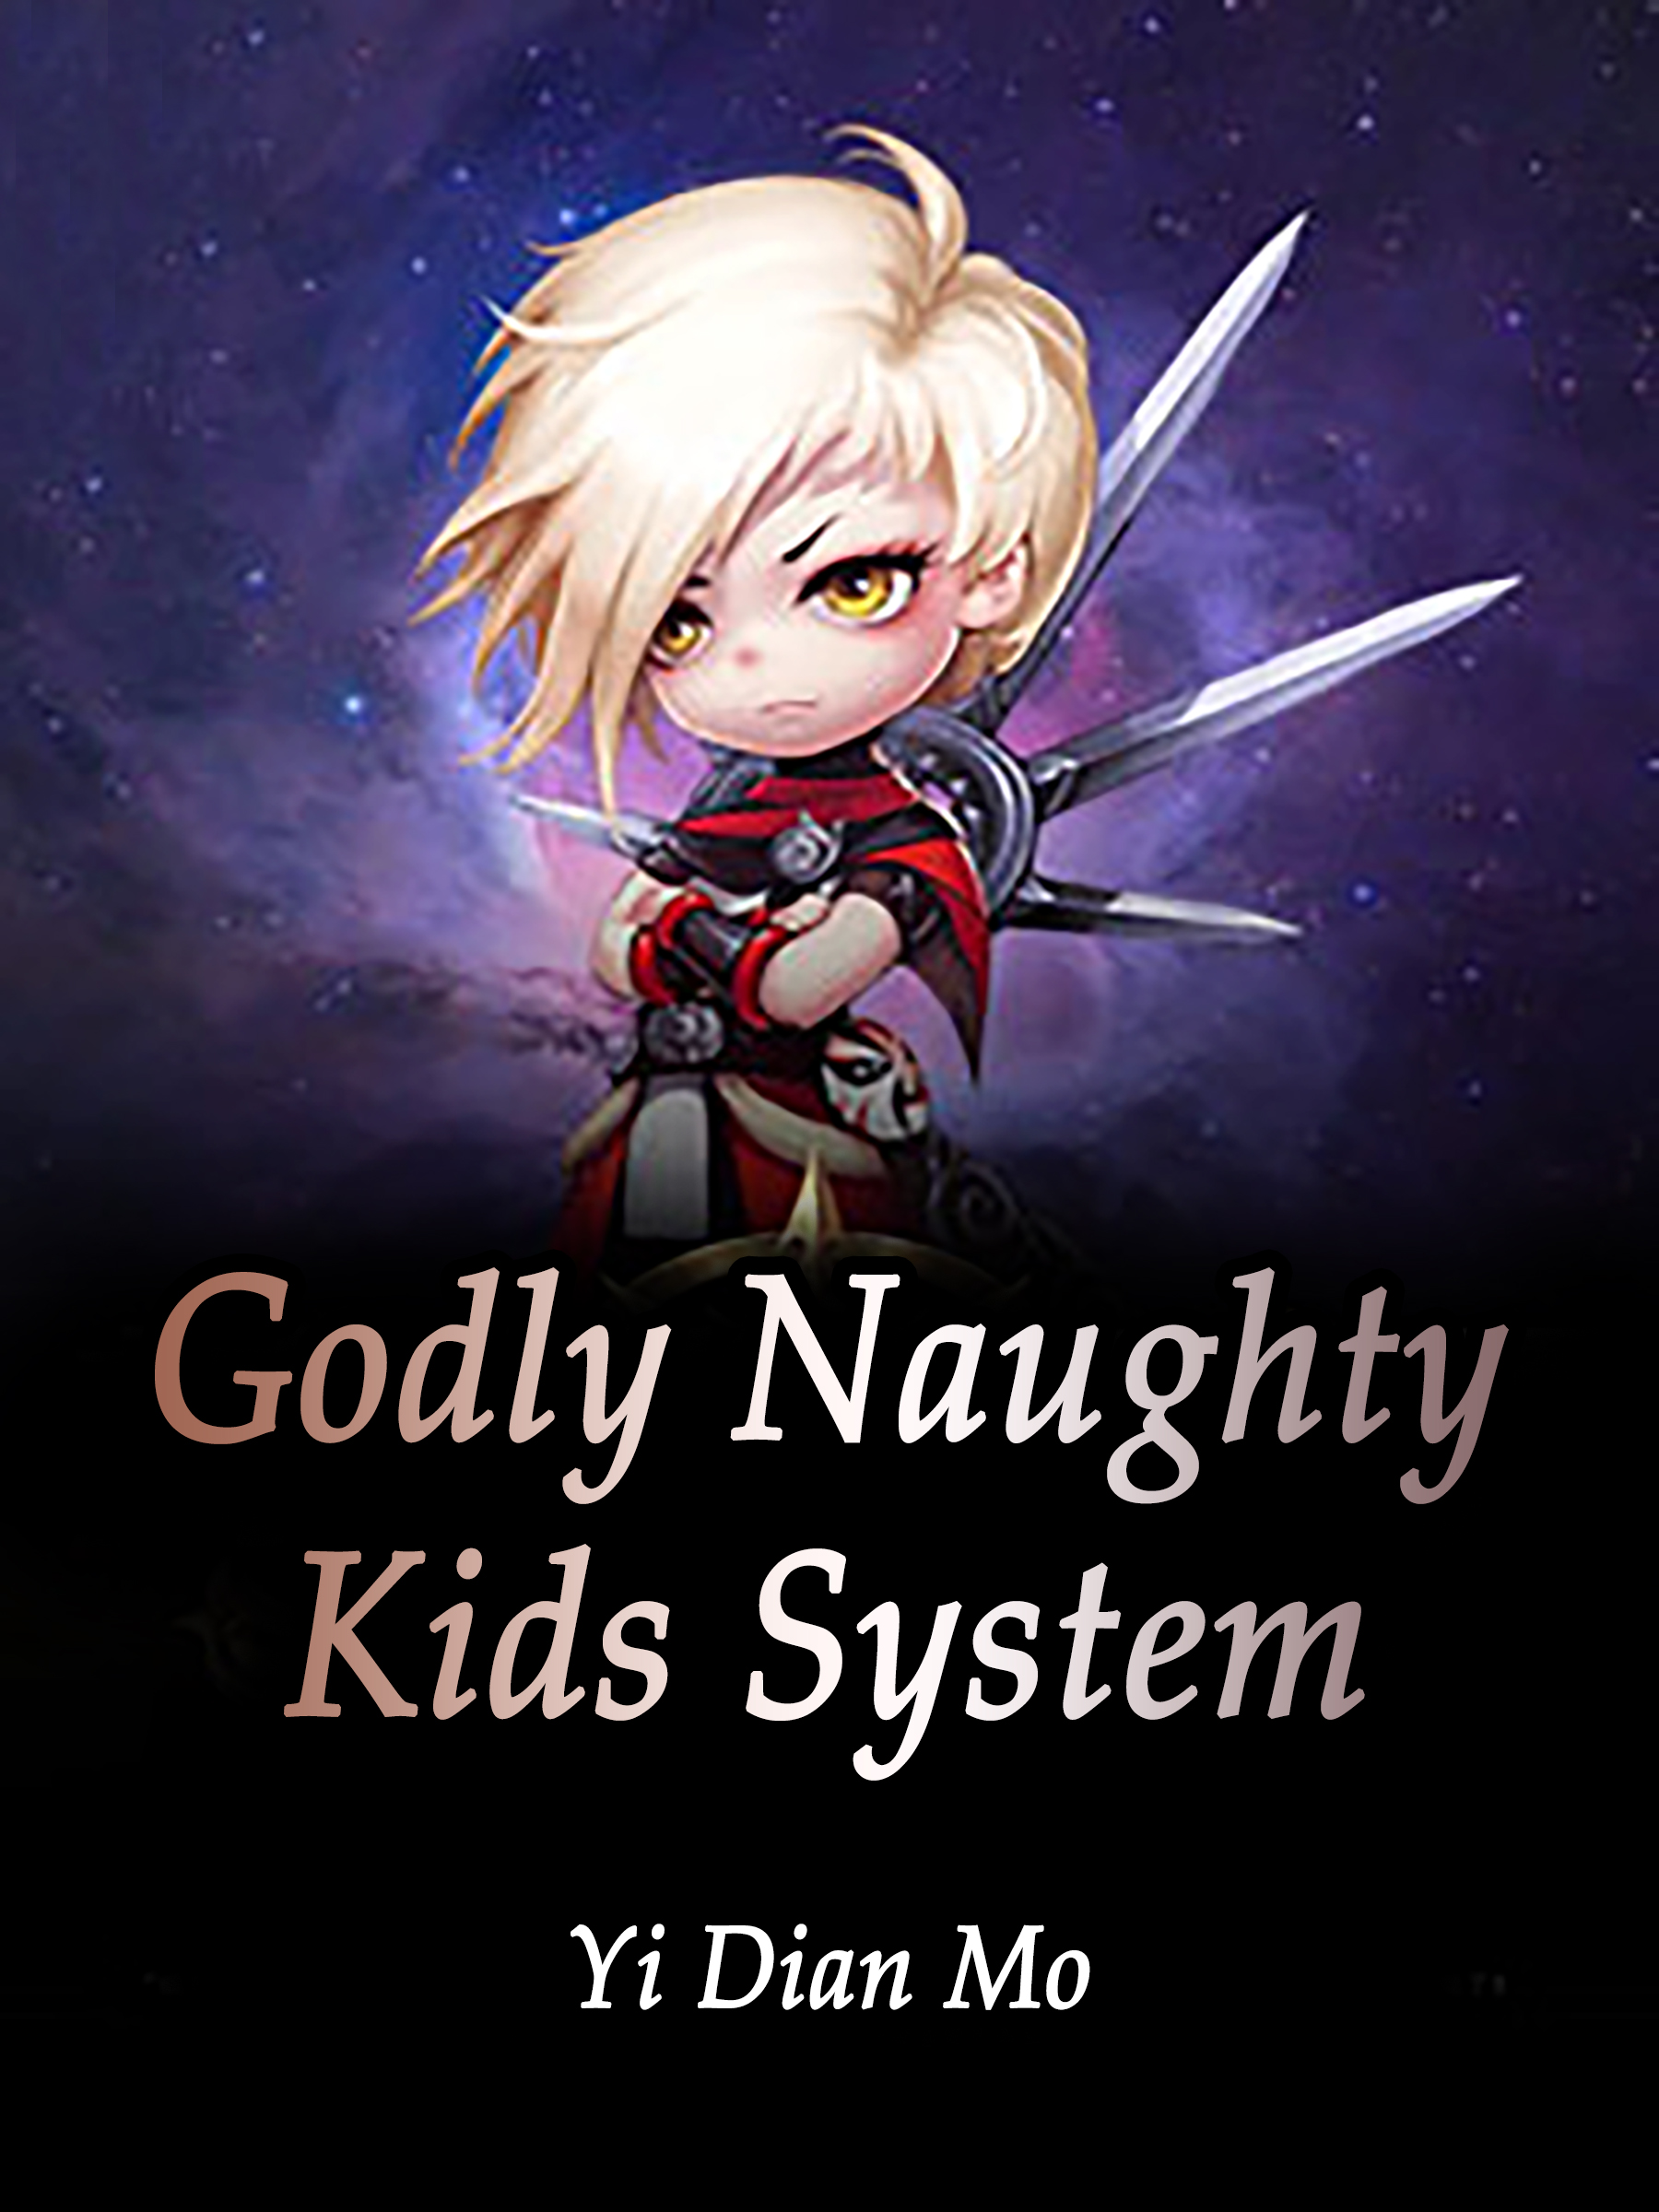 Godly Naughty Kids System